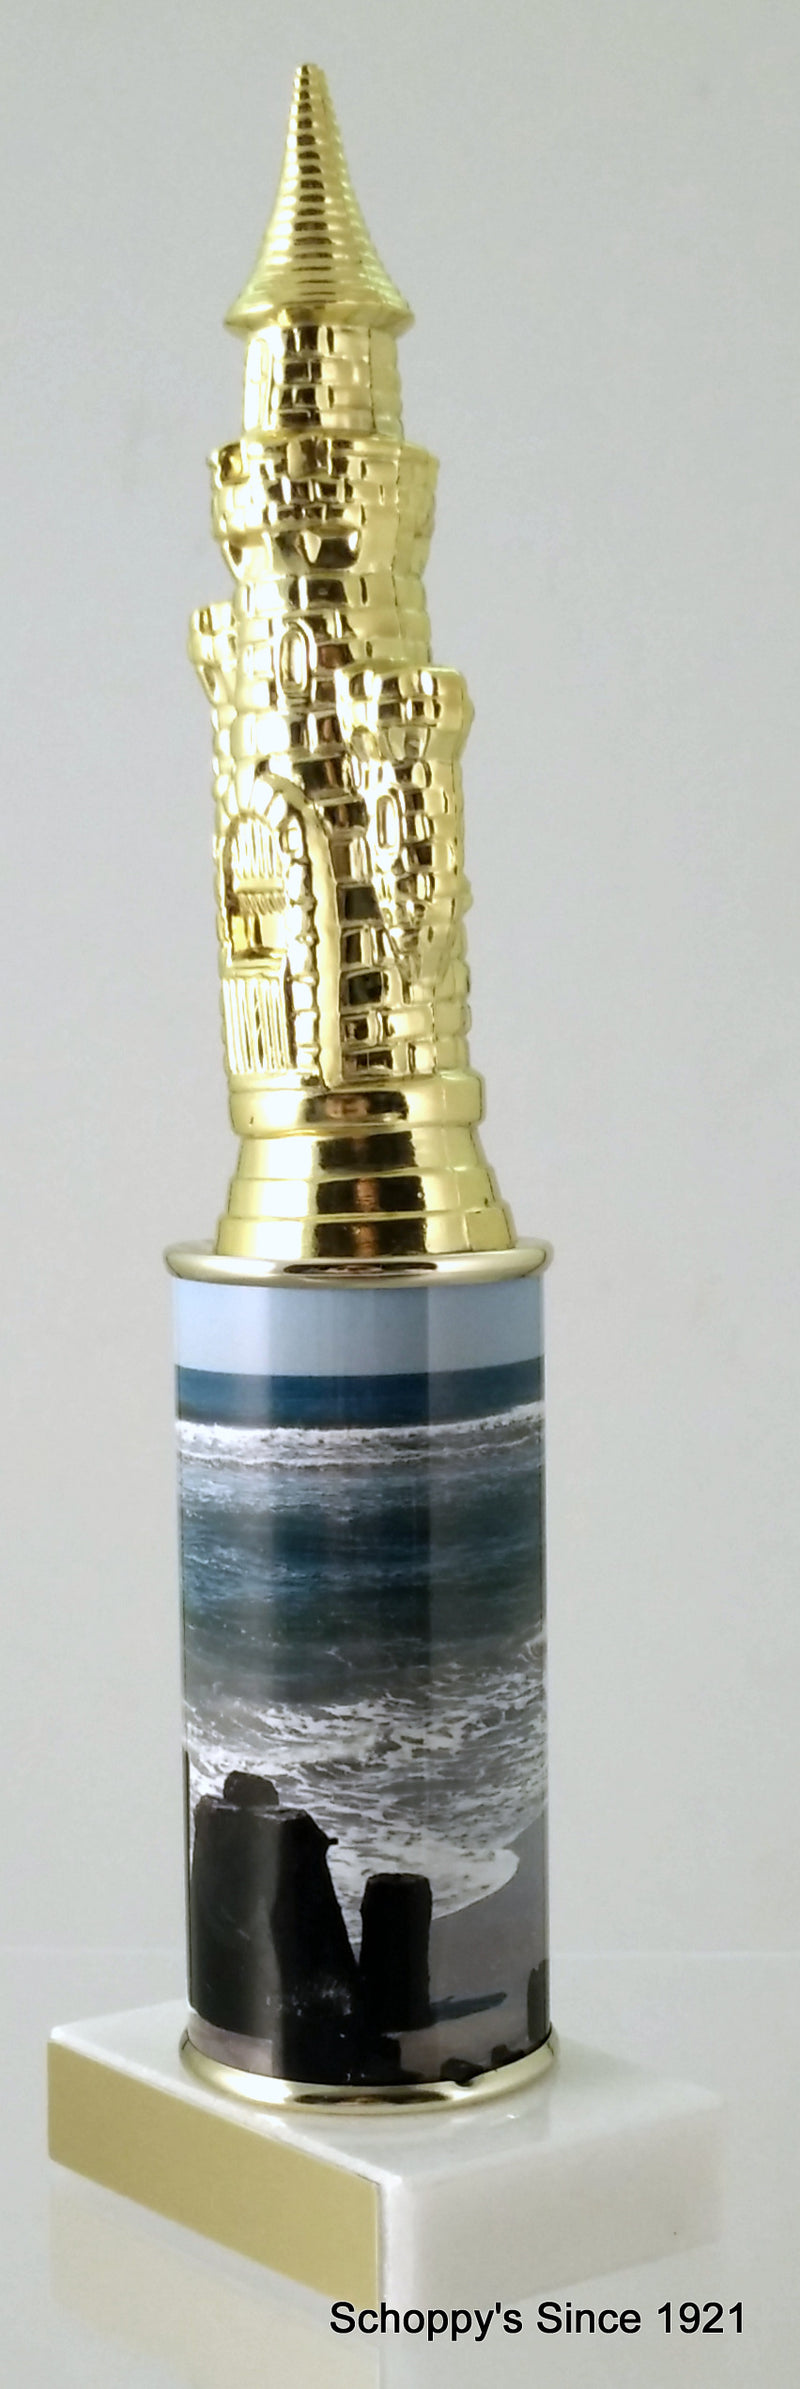 Sandcastle Trophy With Beach Metal Column On Marble-Trophy-Schoppy&